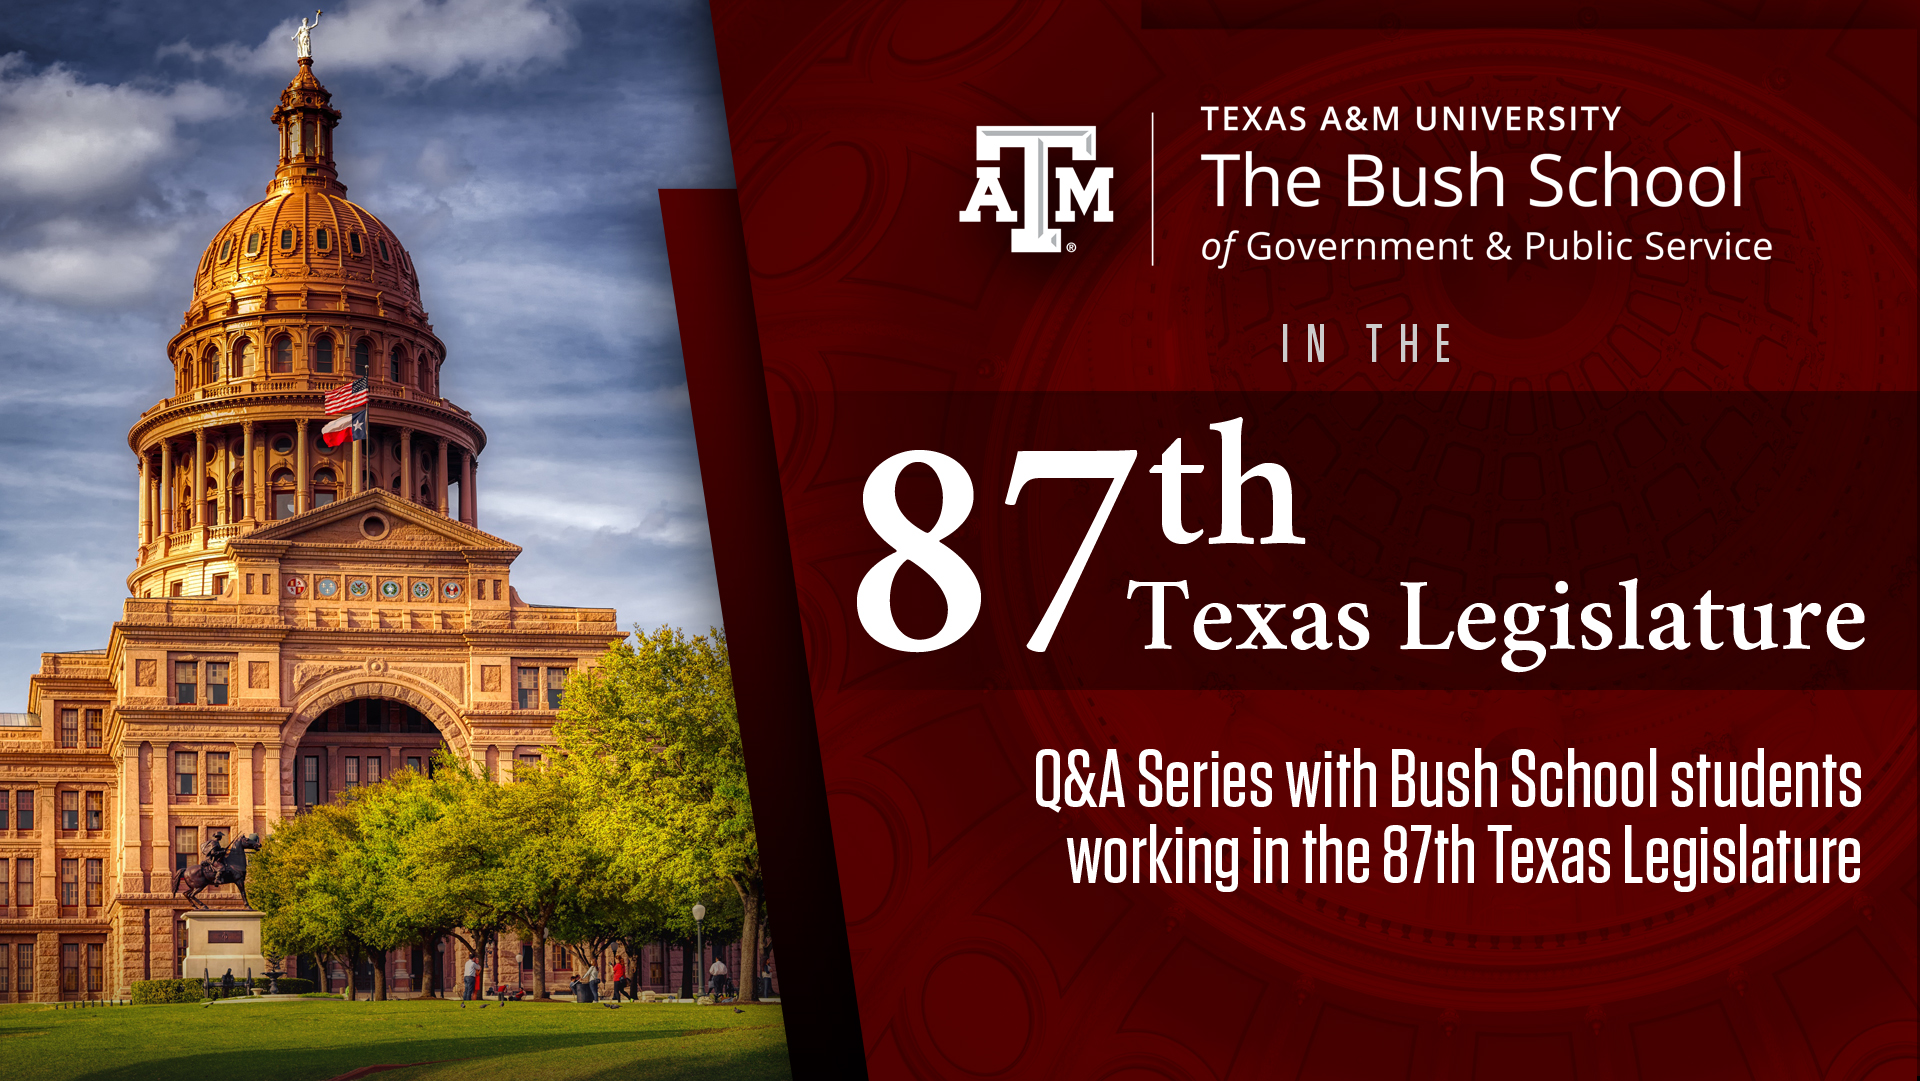 Bush School in the 87th Texas Legislature